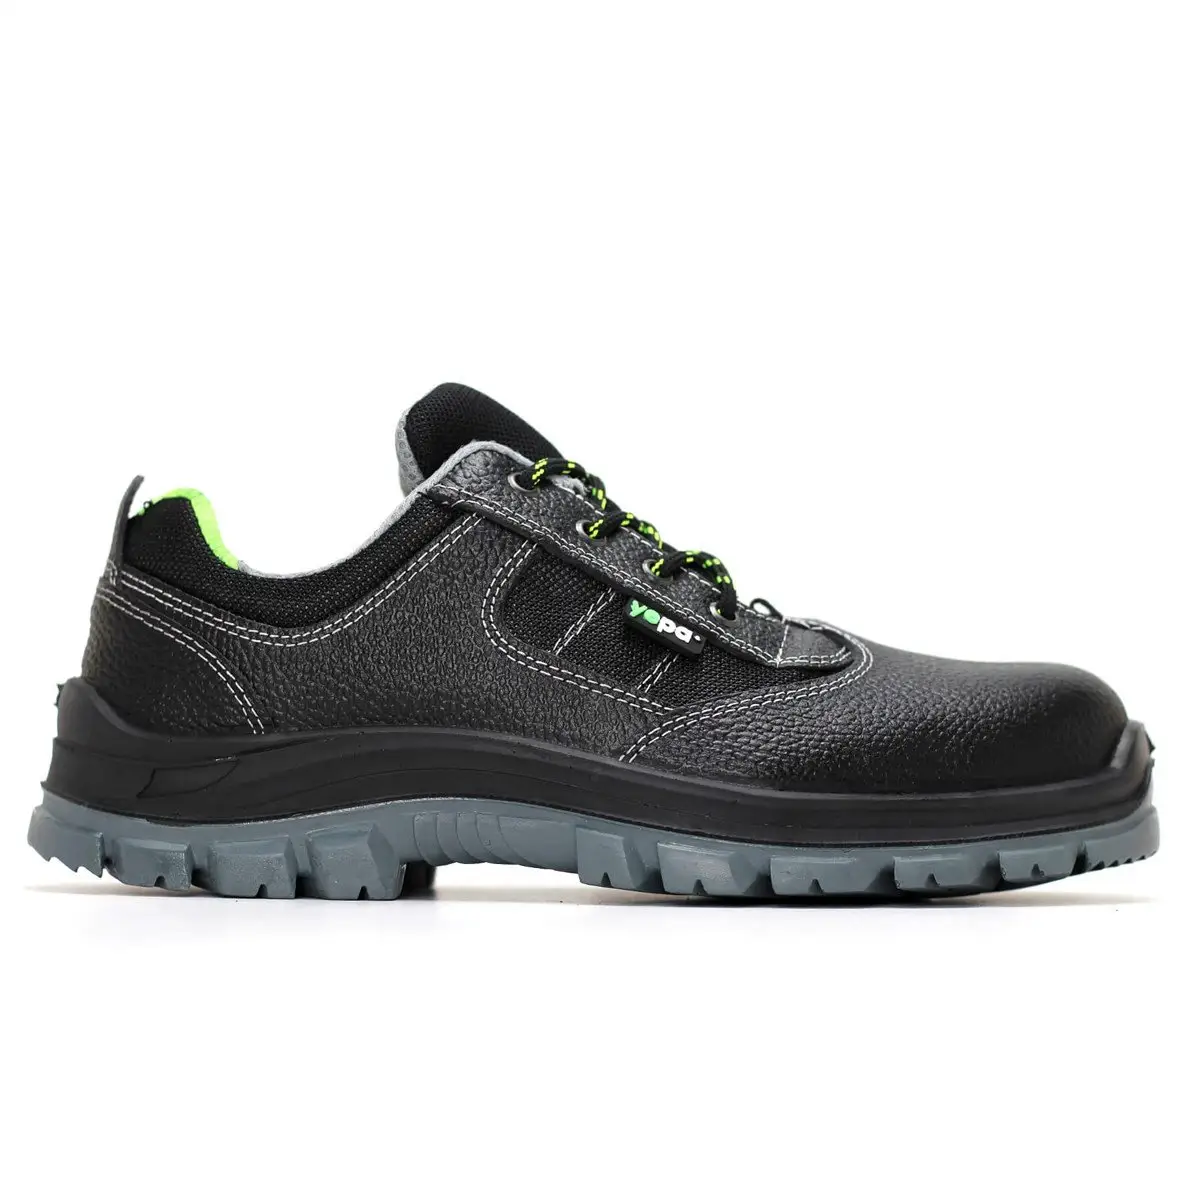 Yepa Roma S2 Steel Toe Black Leather Safety Shoe PU/PU Double Density Anti Slip Outsole High Quality